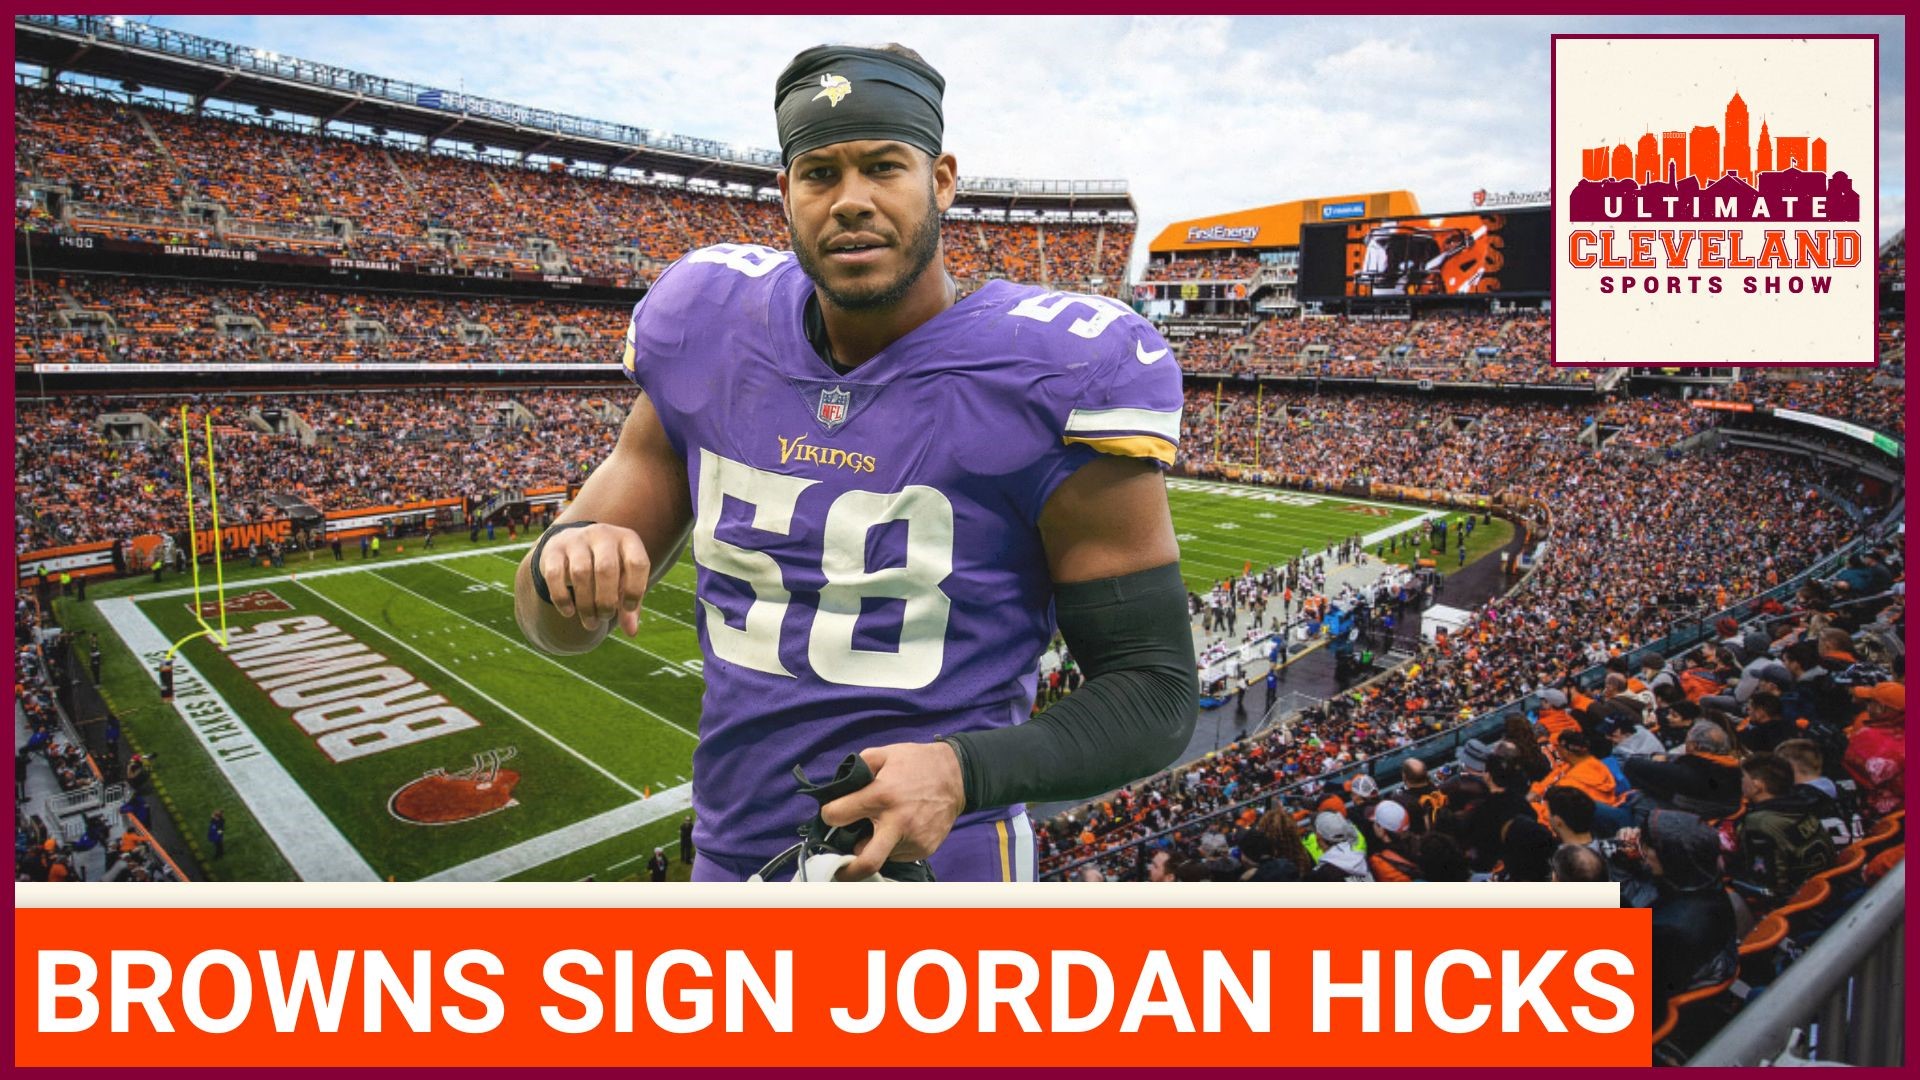 Jordan Hicks reunites with Cleveland Browns DC Jim Schwartz after inking new deal